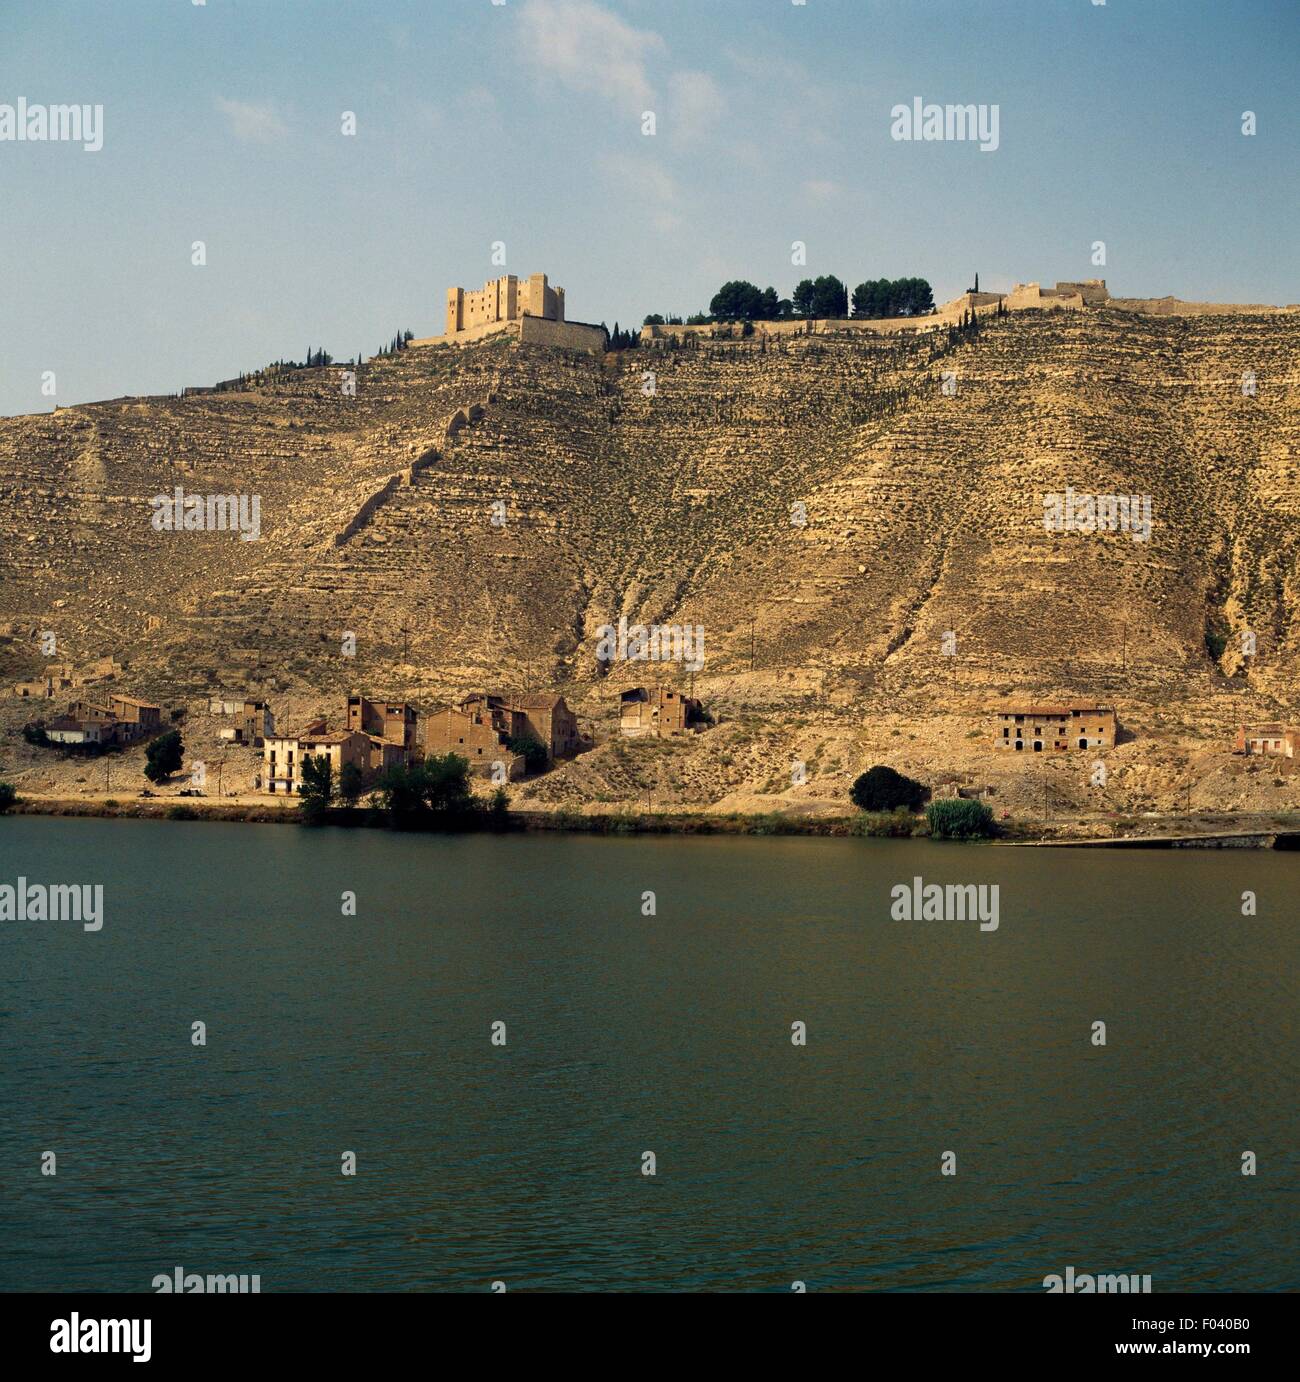 Mequinenza castle perched above the Ebro river, Mequinenza, Aragon, Spain. Stock Photo